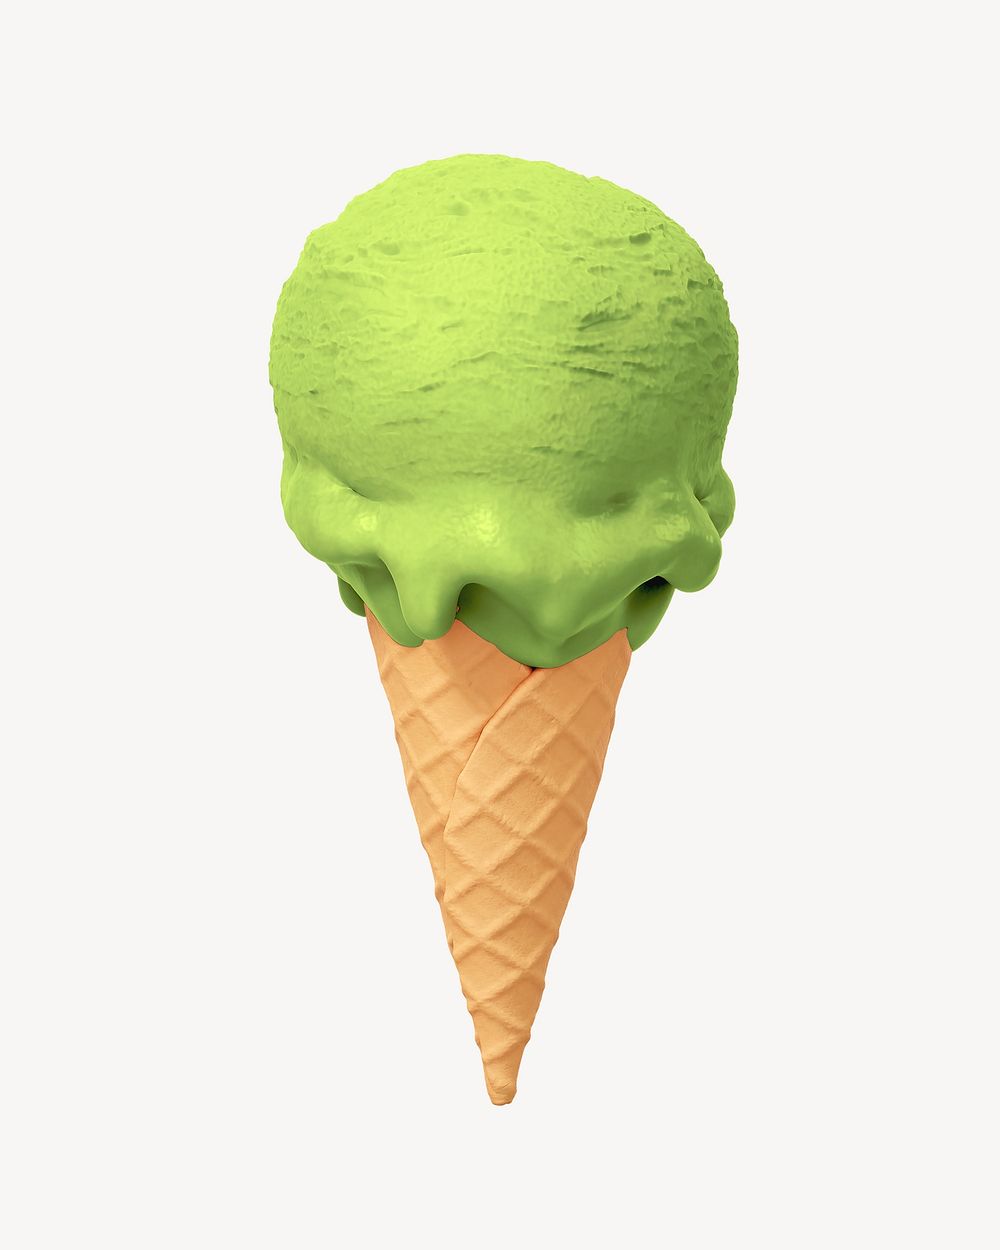 3D matcha ice-cream cone, element illustration